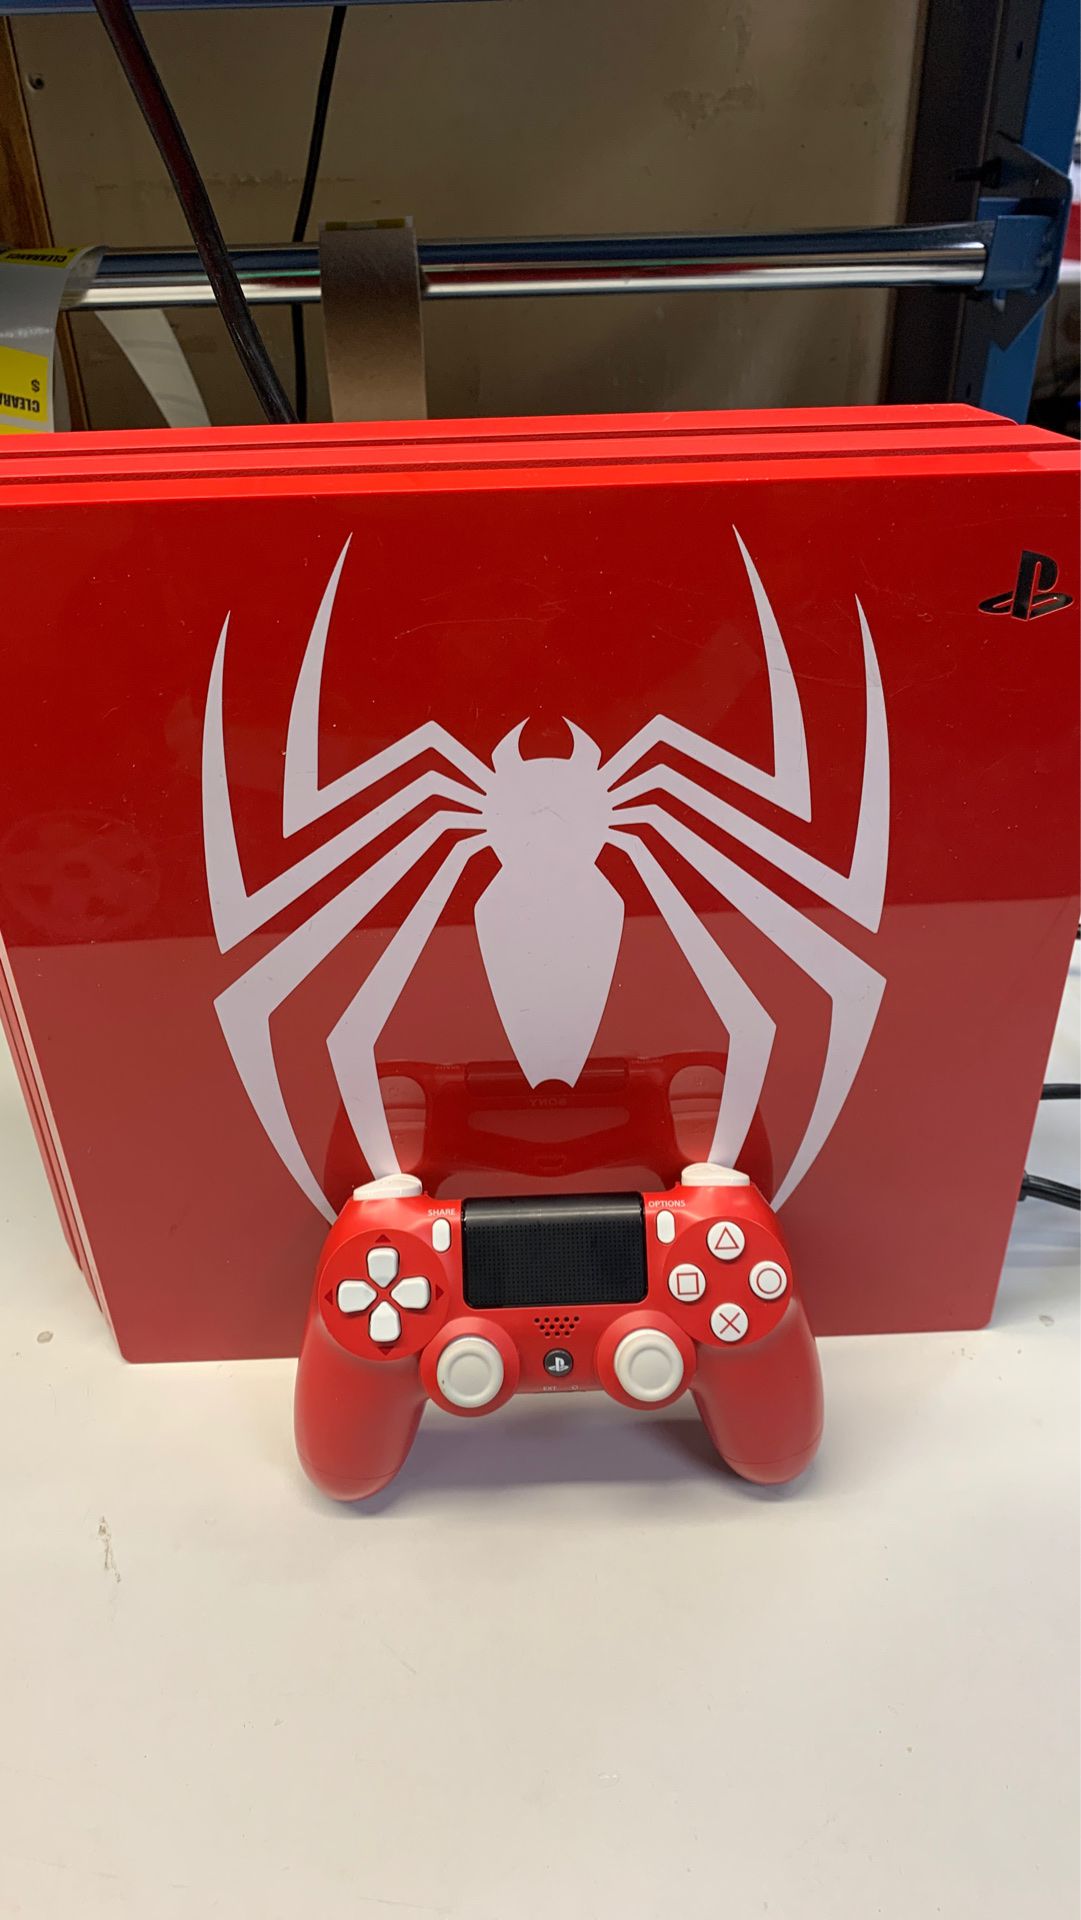 Spider-Man edition PS4 PRO